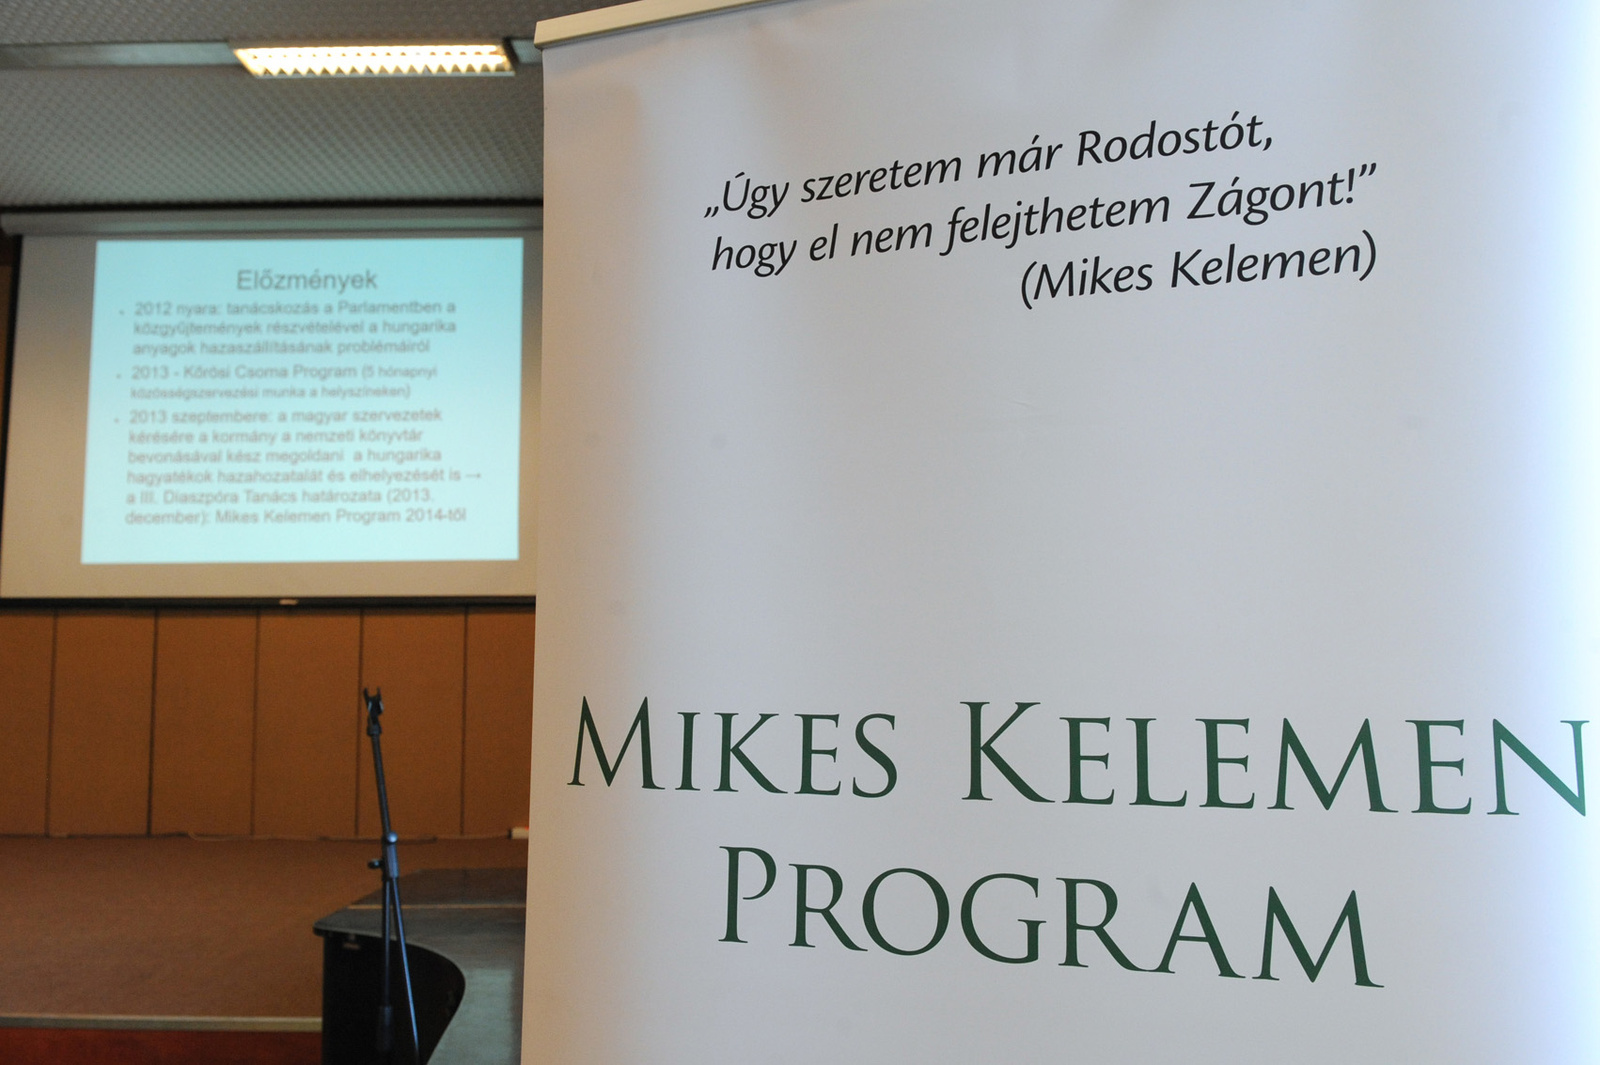 Mikes Kelemen Program – konferencia